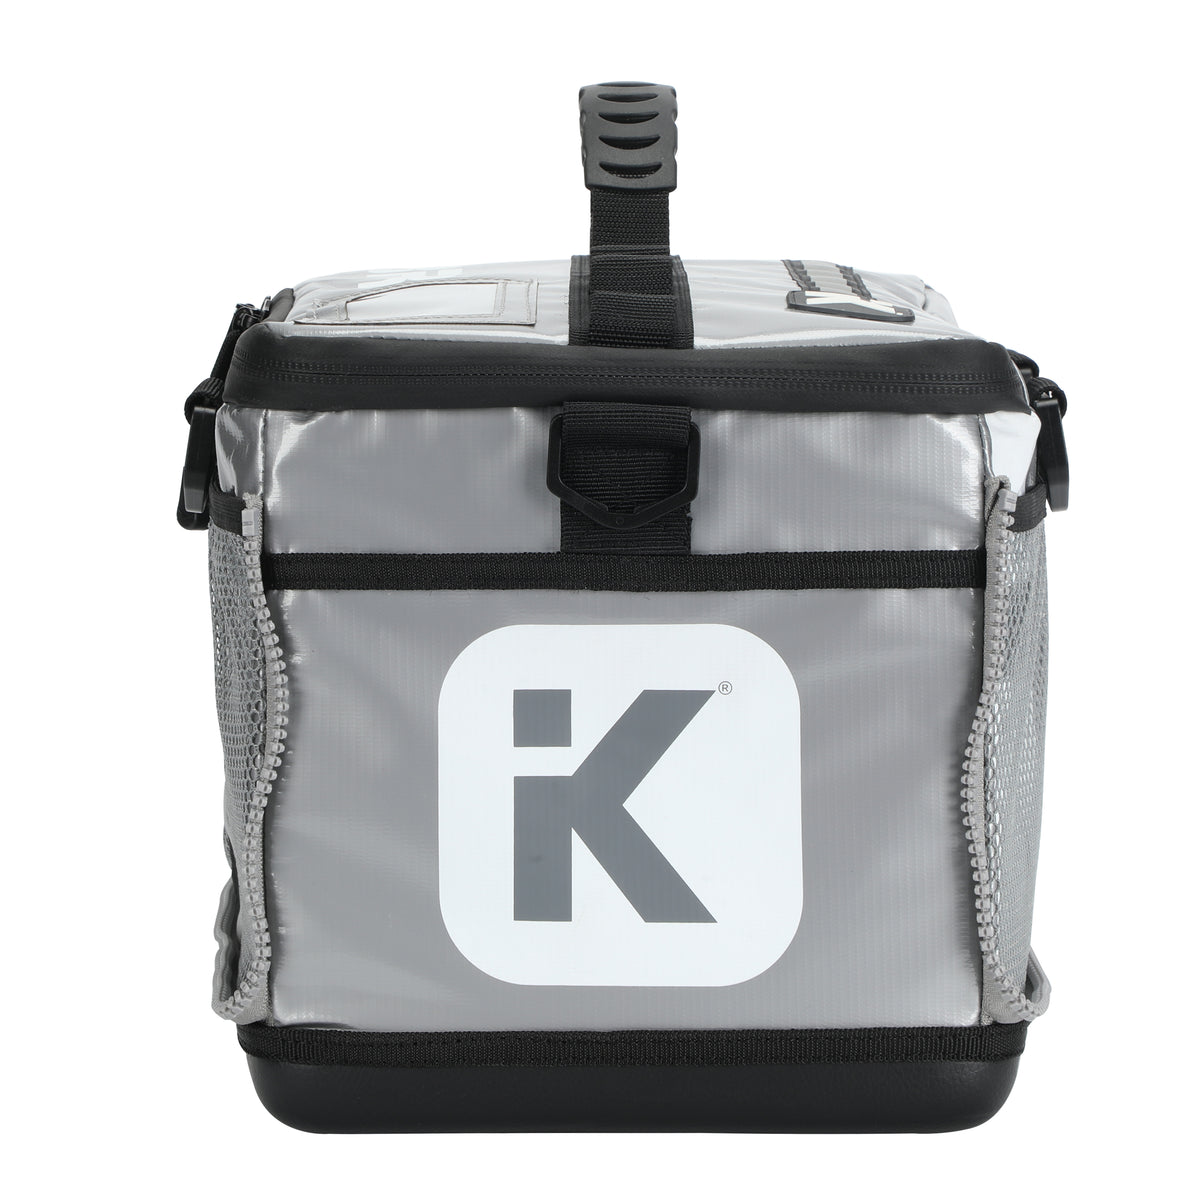 The KitBrix Hero Bag